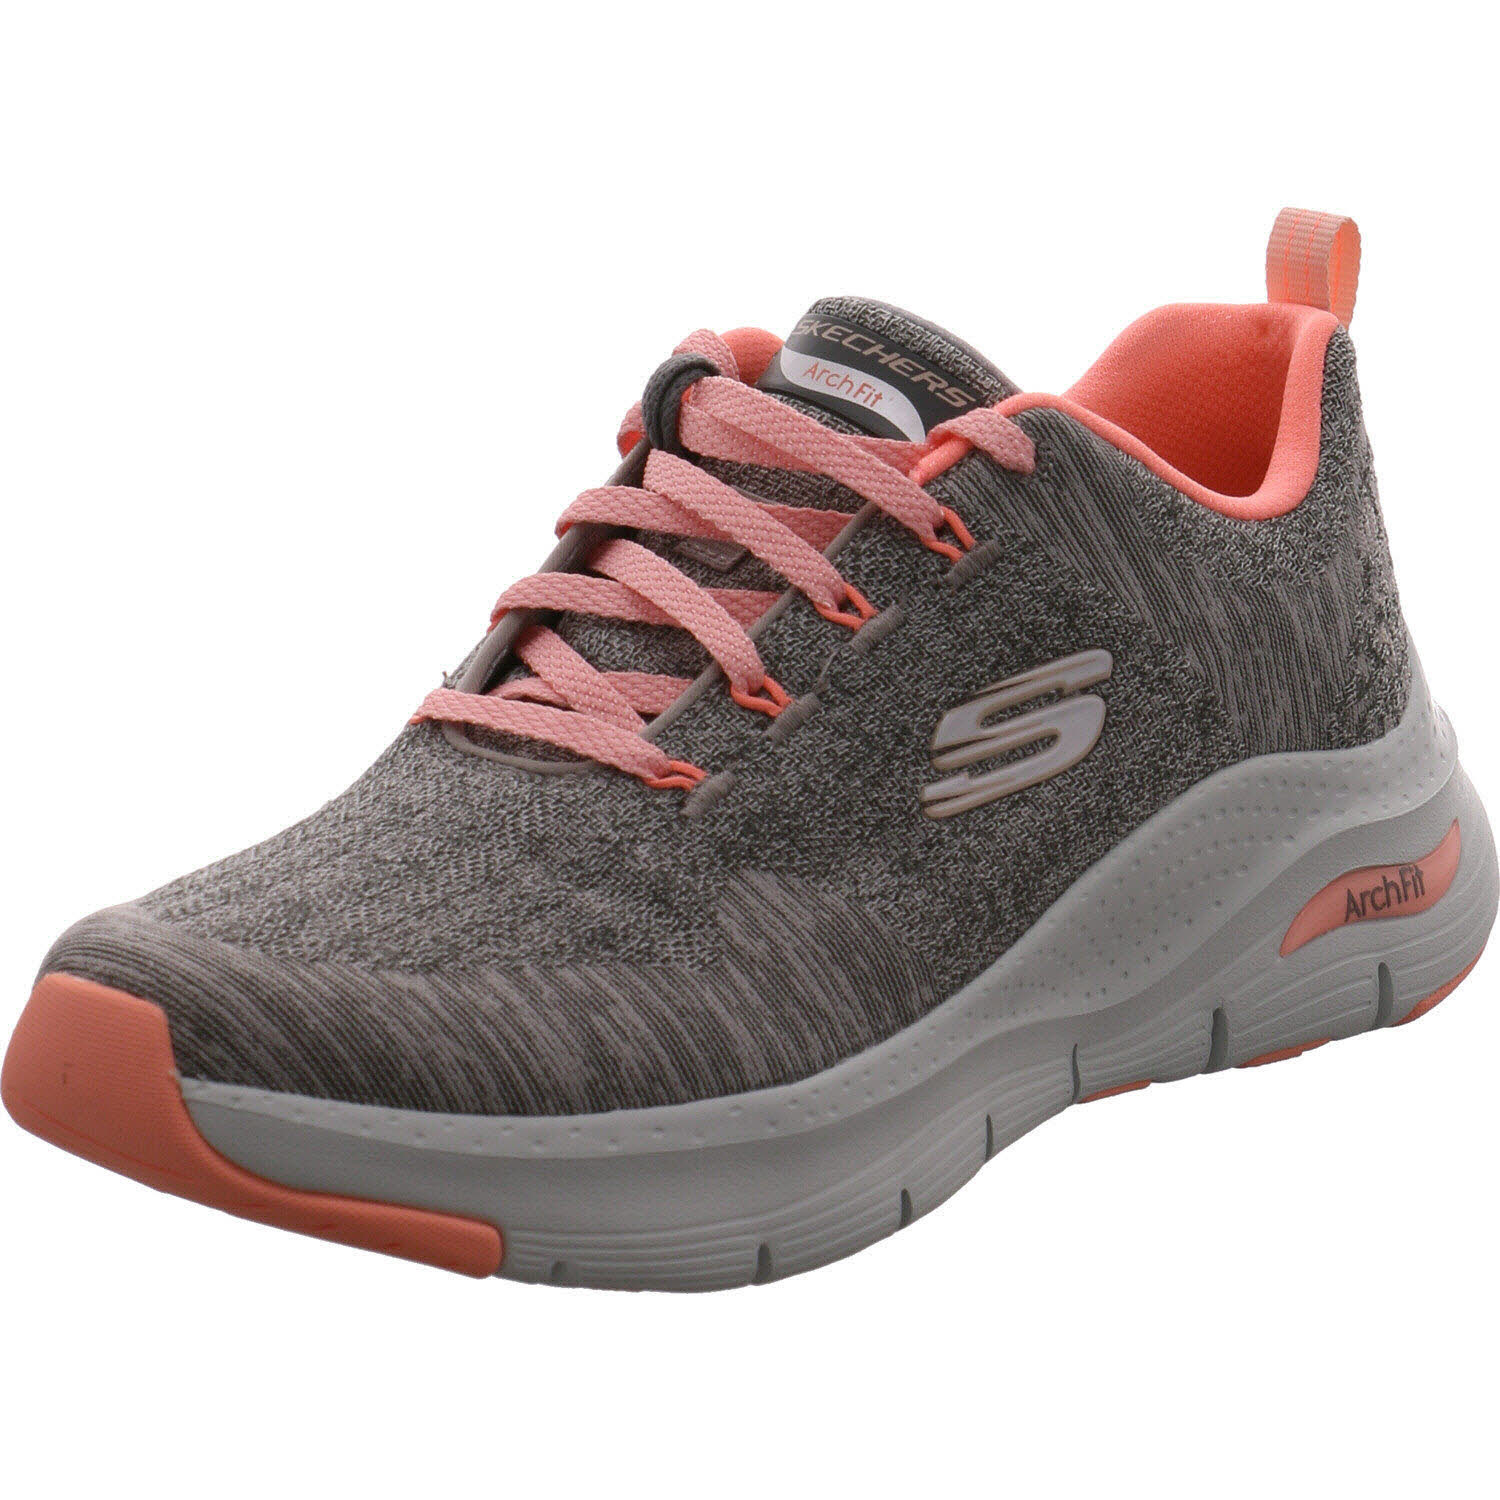 Skechers Sneaker low Arch Fit Comfy Wave Grau/pink für Damen